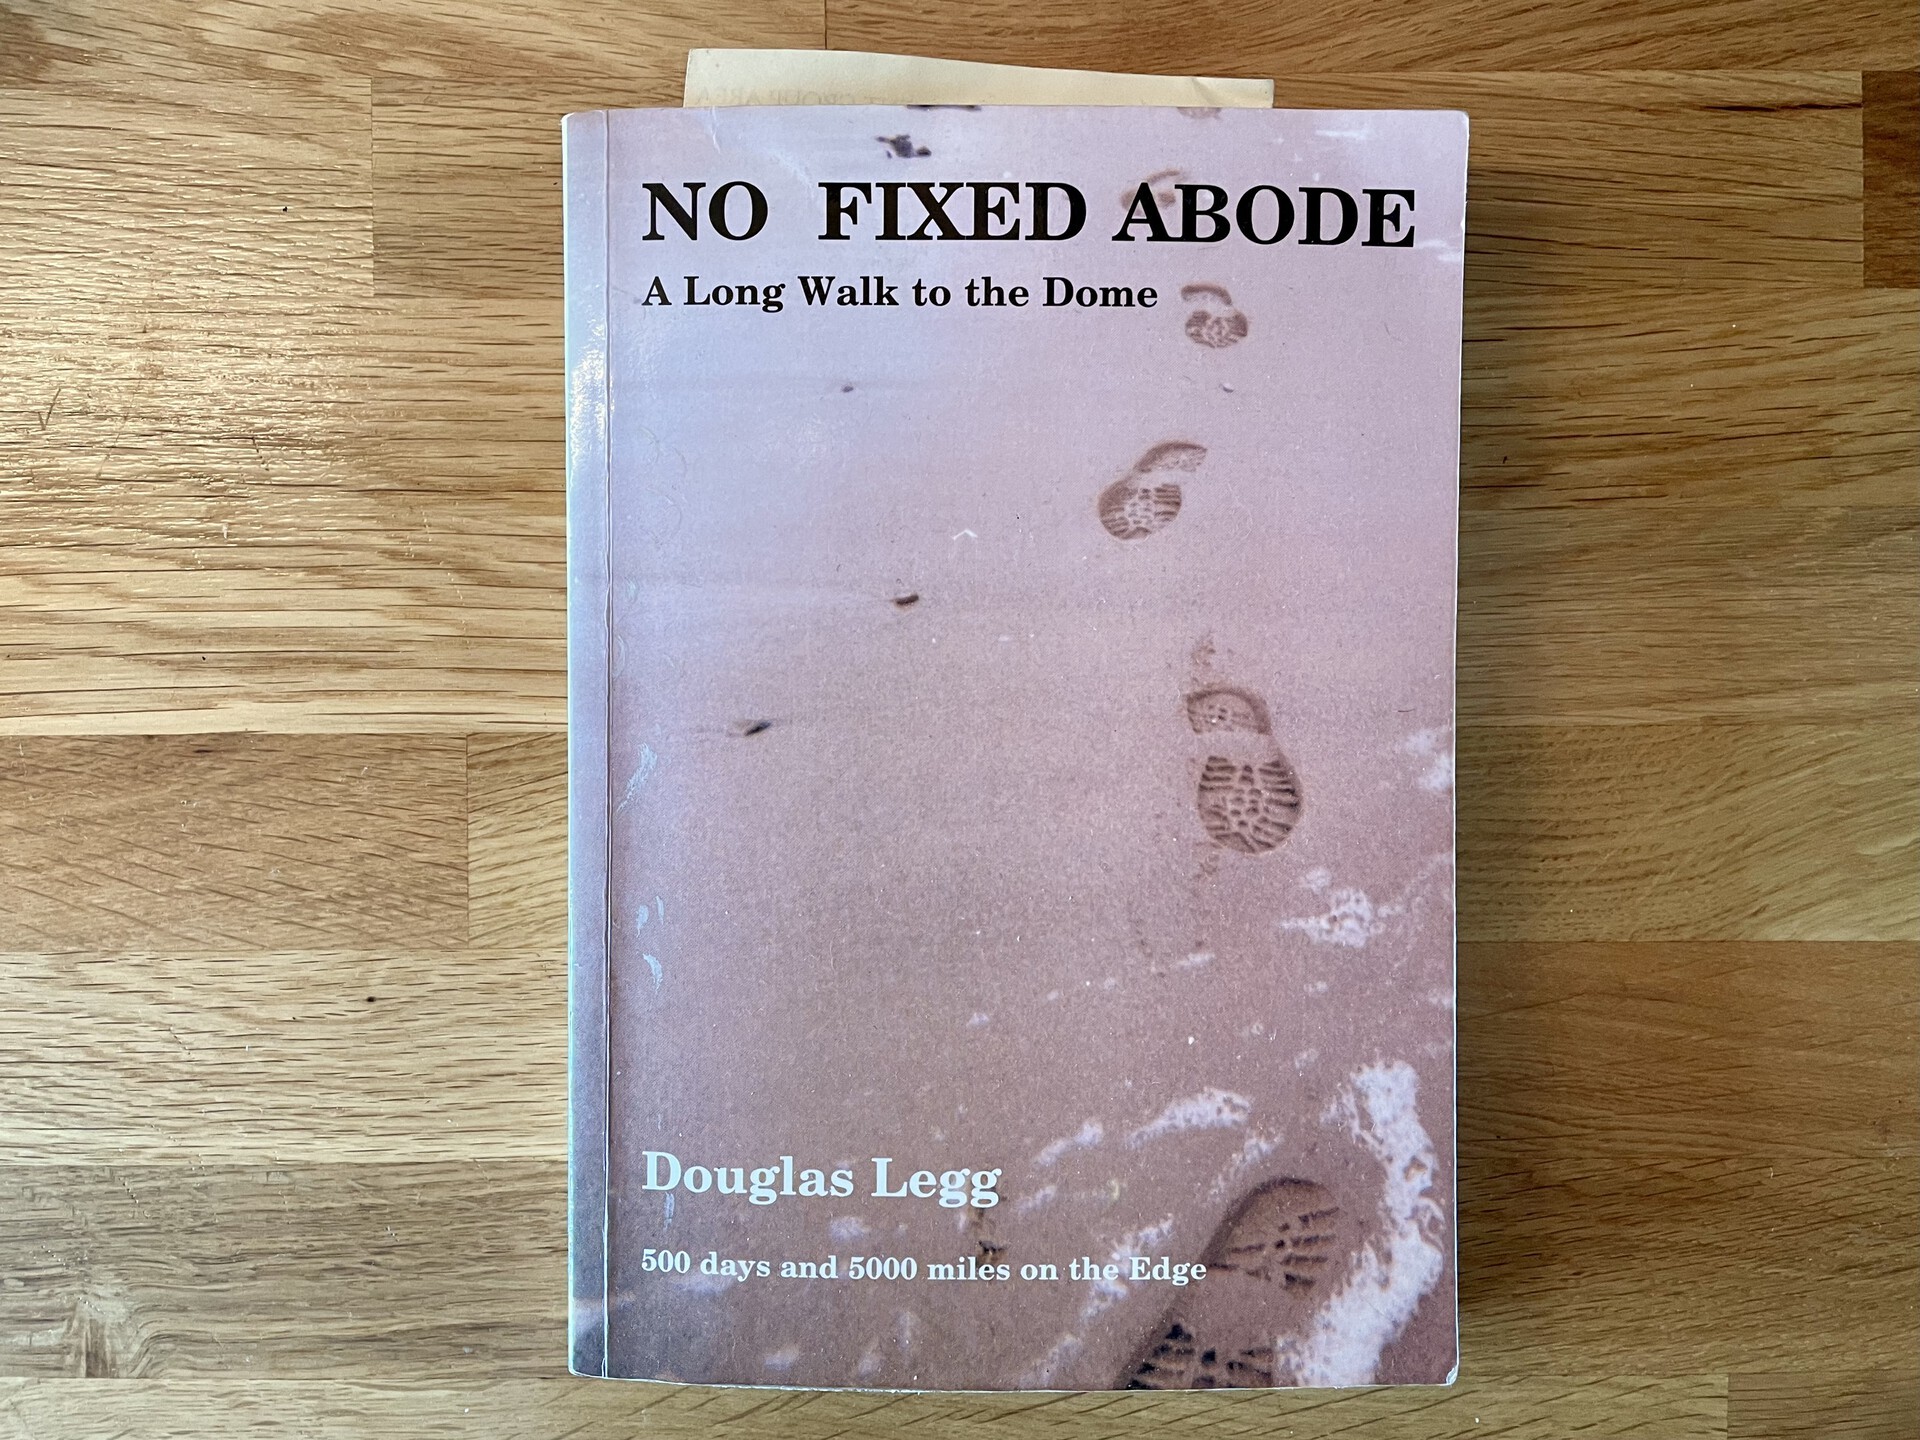 No Fixed Abode, by Douglas Legg